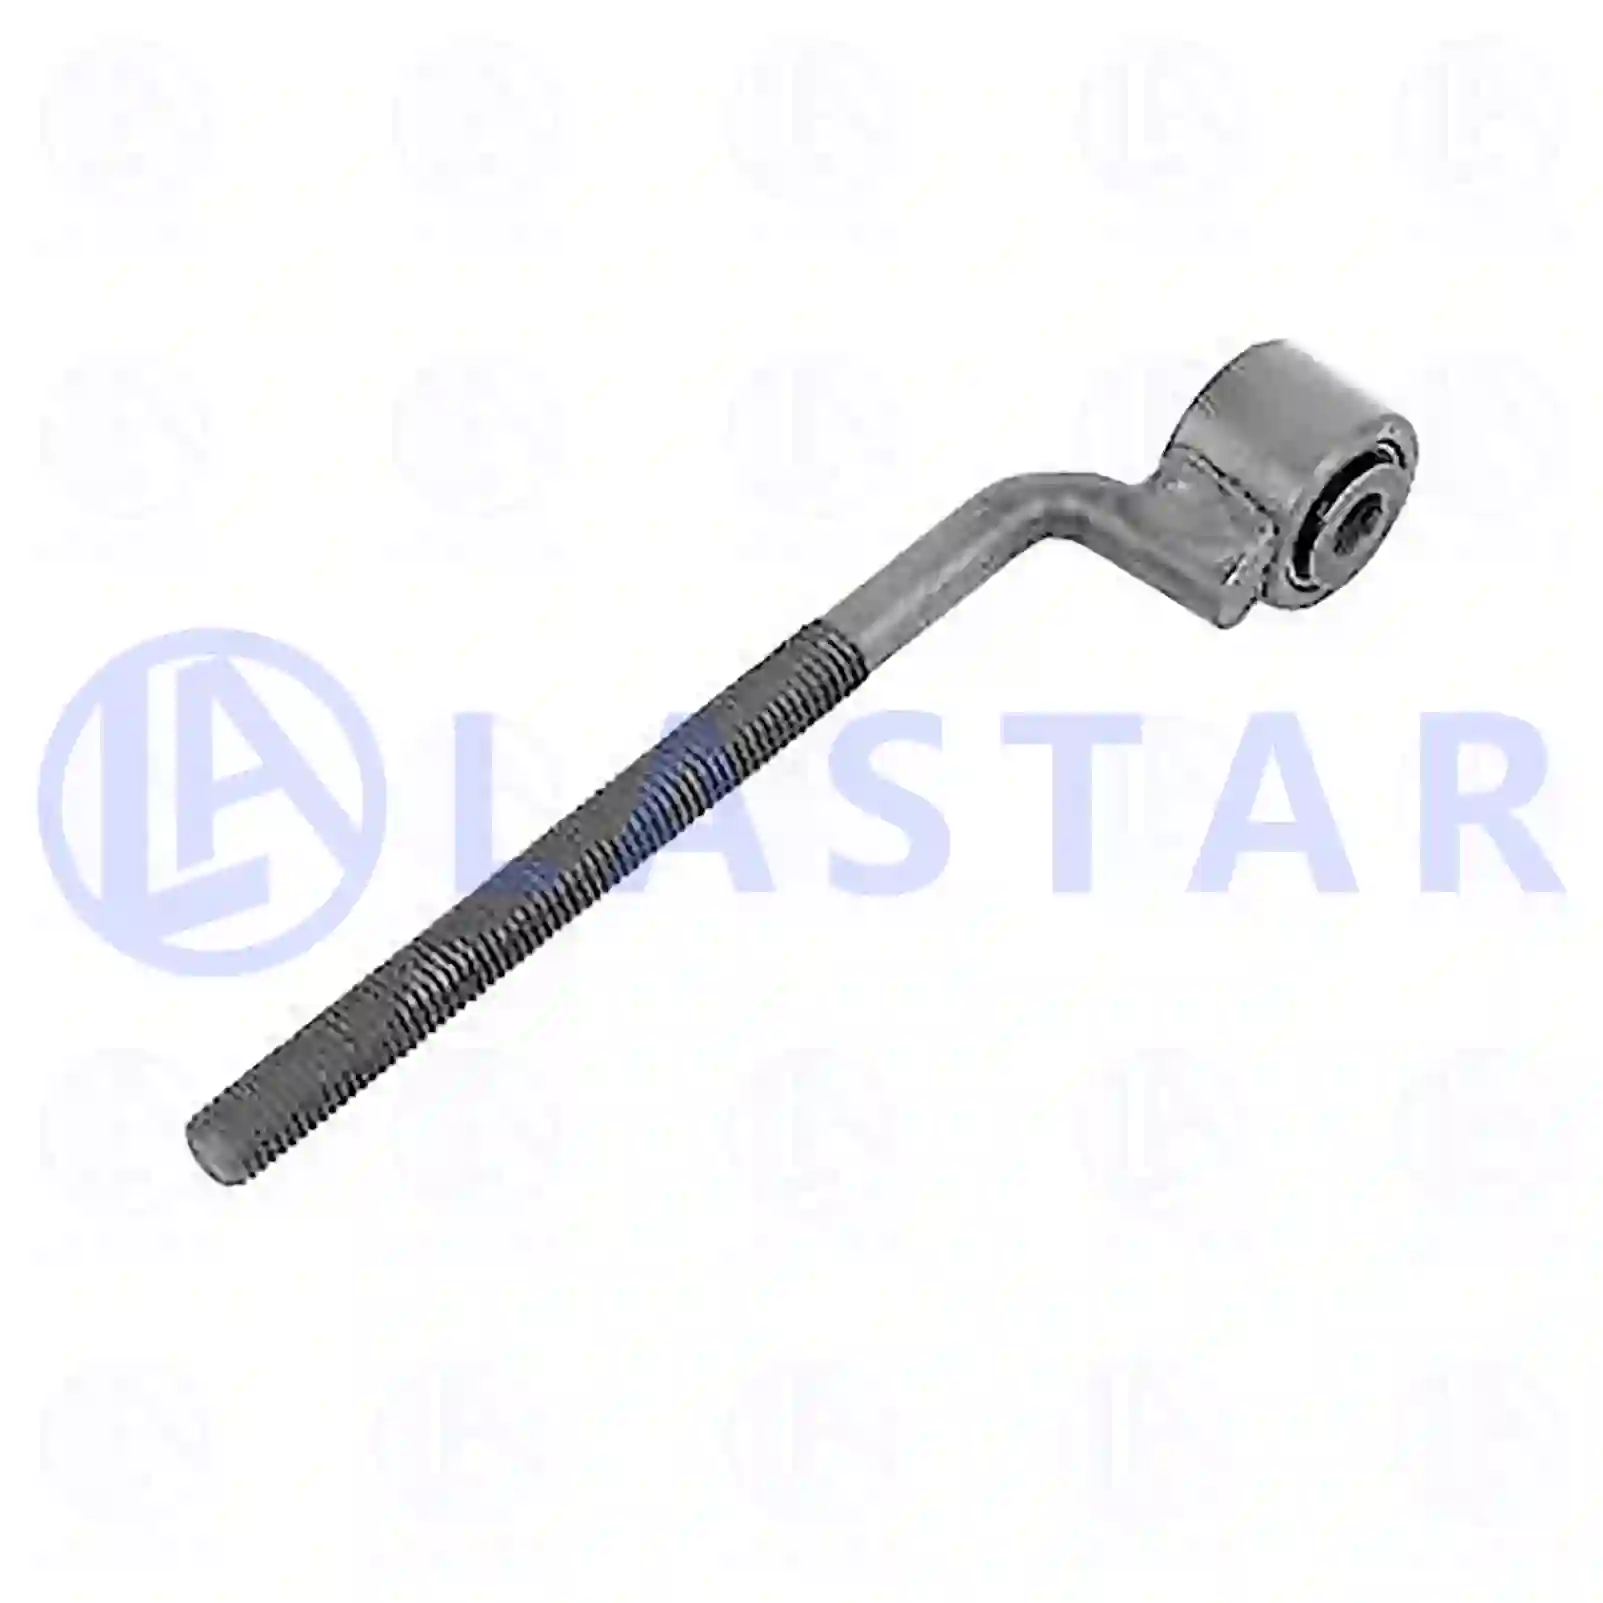 Alternator Clamping screw, la no: 77711590 ,  oem no:3521502472 Lastar Spare Part | Truck Spare Parts, Auotomotive Spare Parts